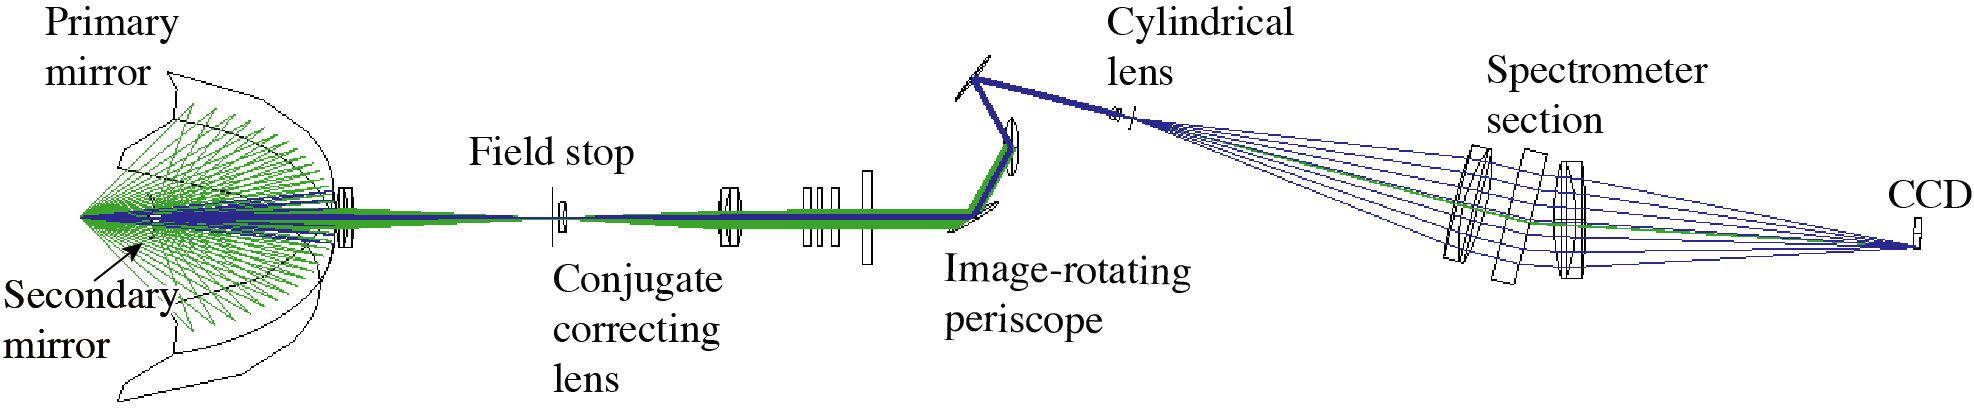 Figure illustrating diagnostic configuration